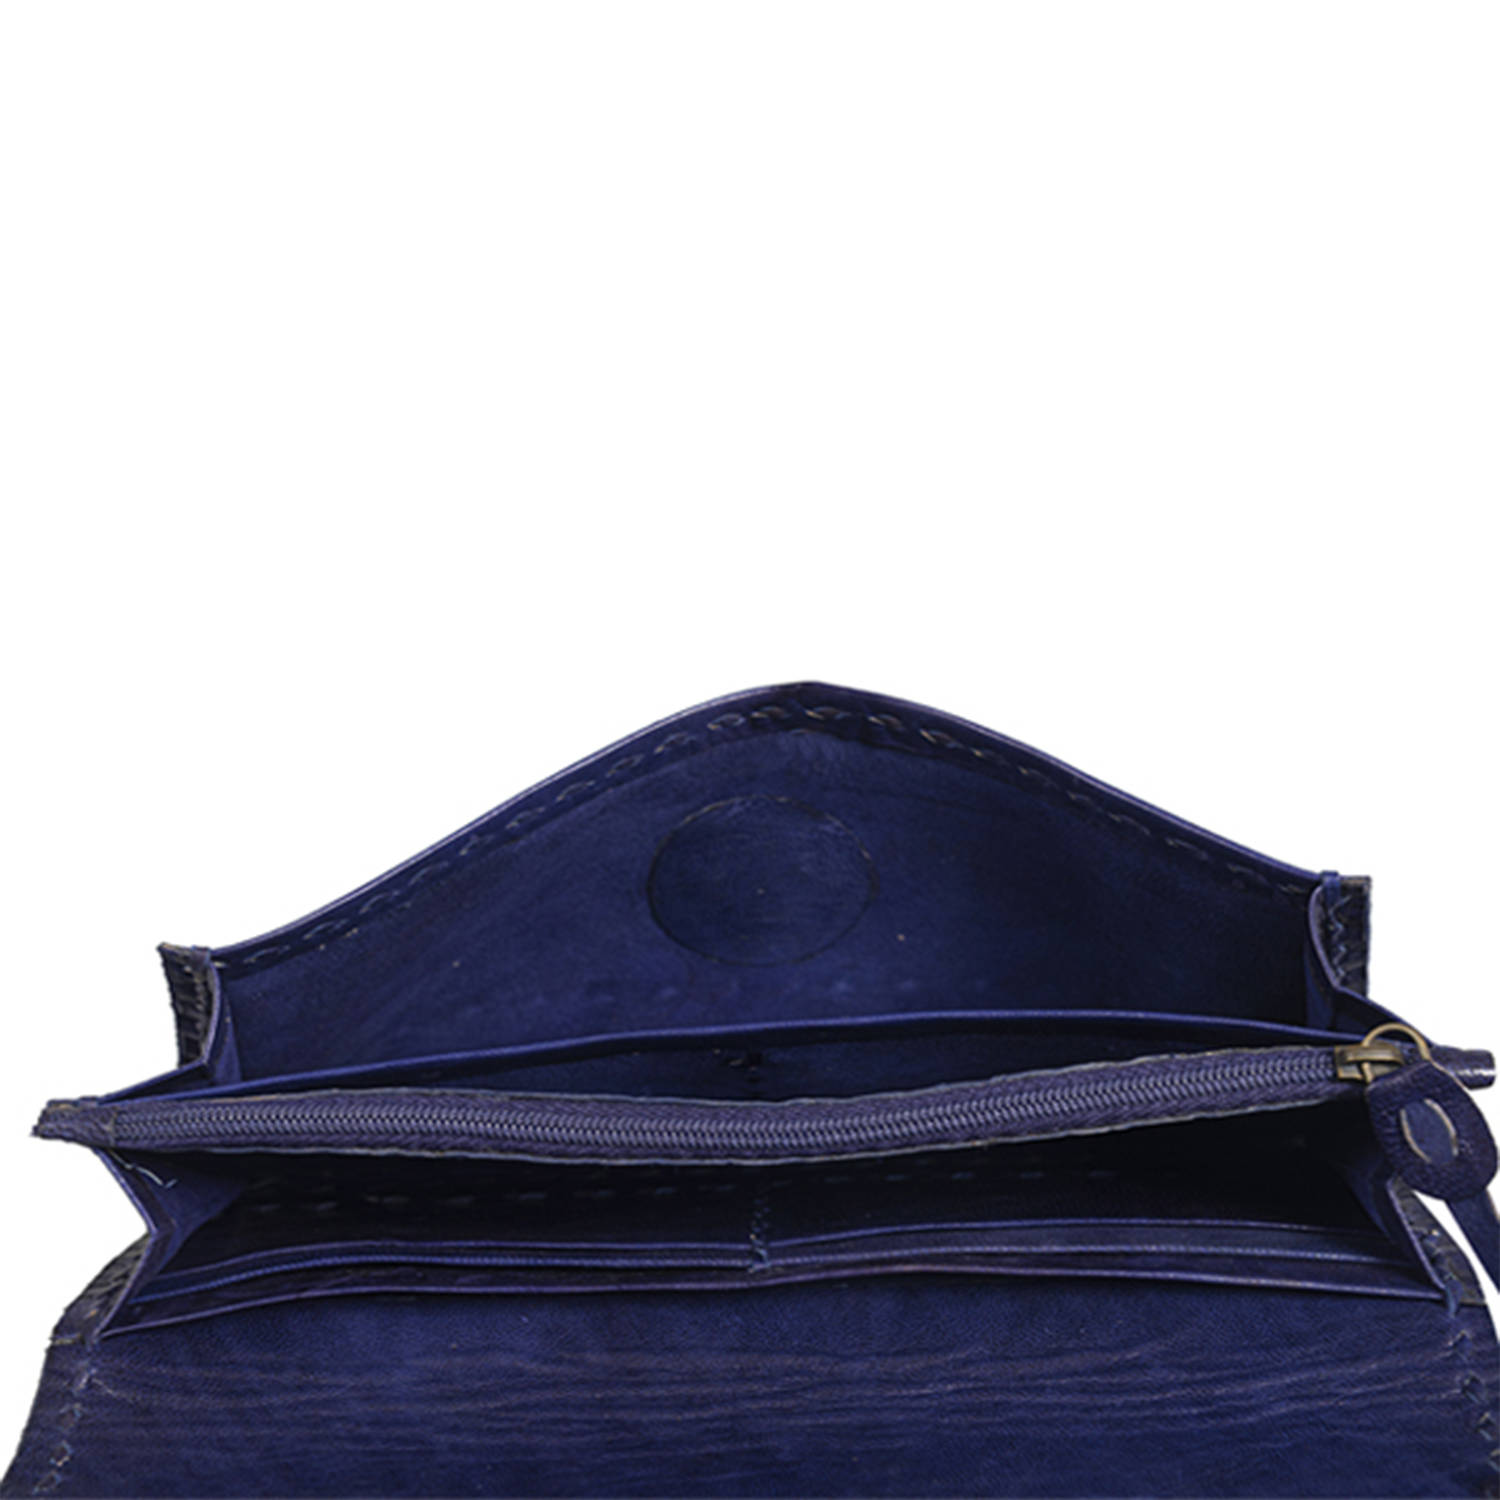 Womens Navy Nylon Shoulder Tote Medium Dark Blue Nylon Handbag Purse f